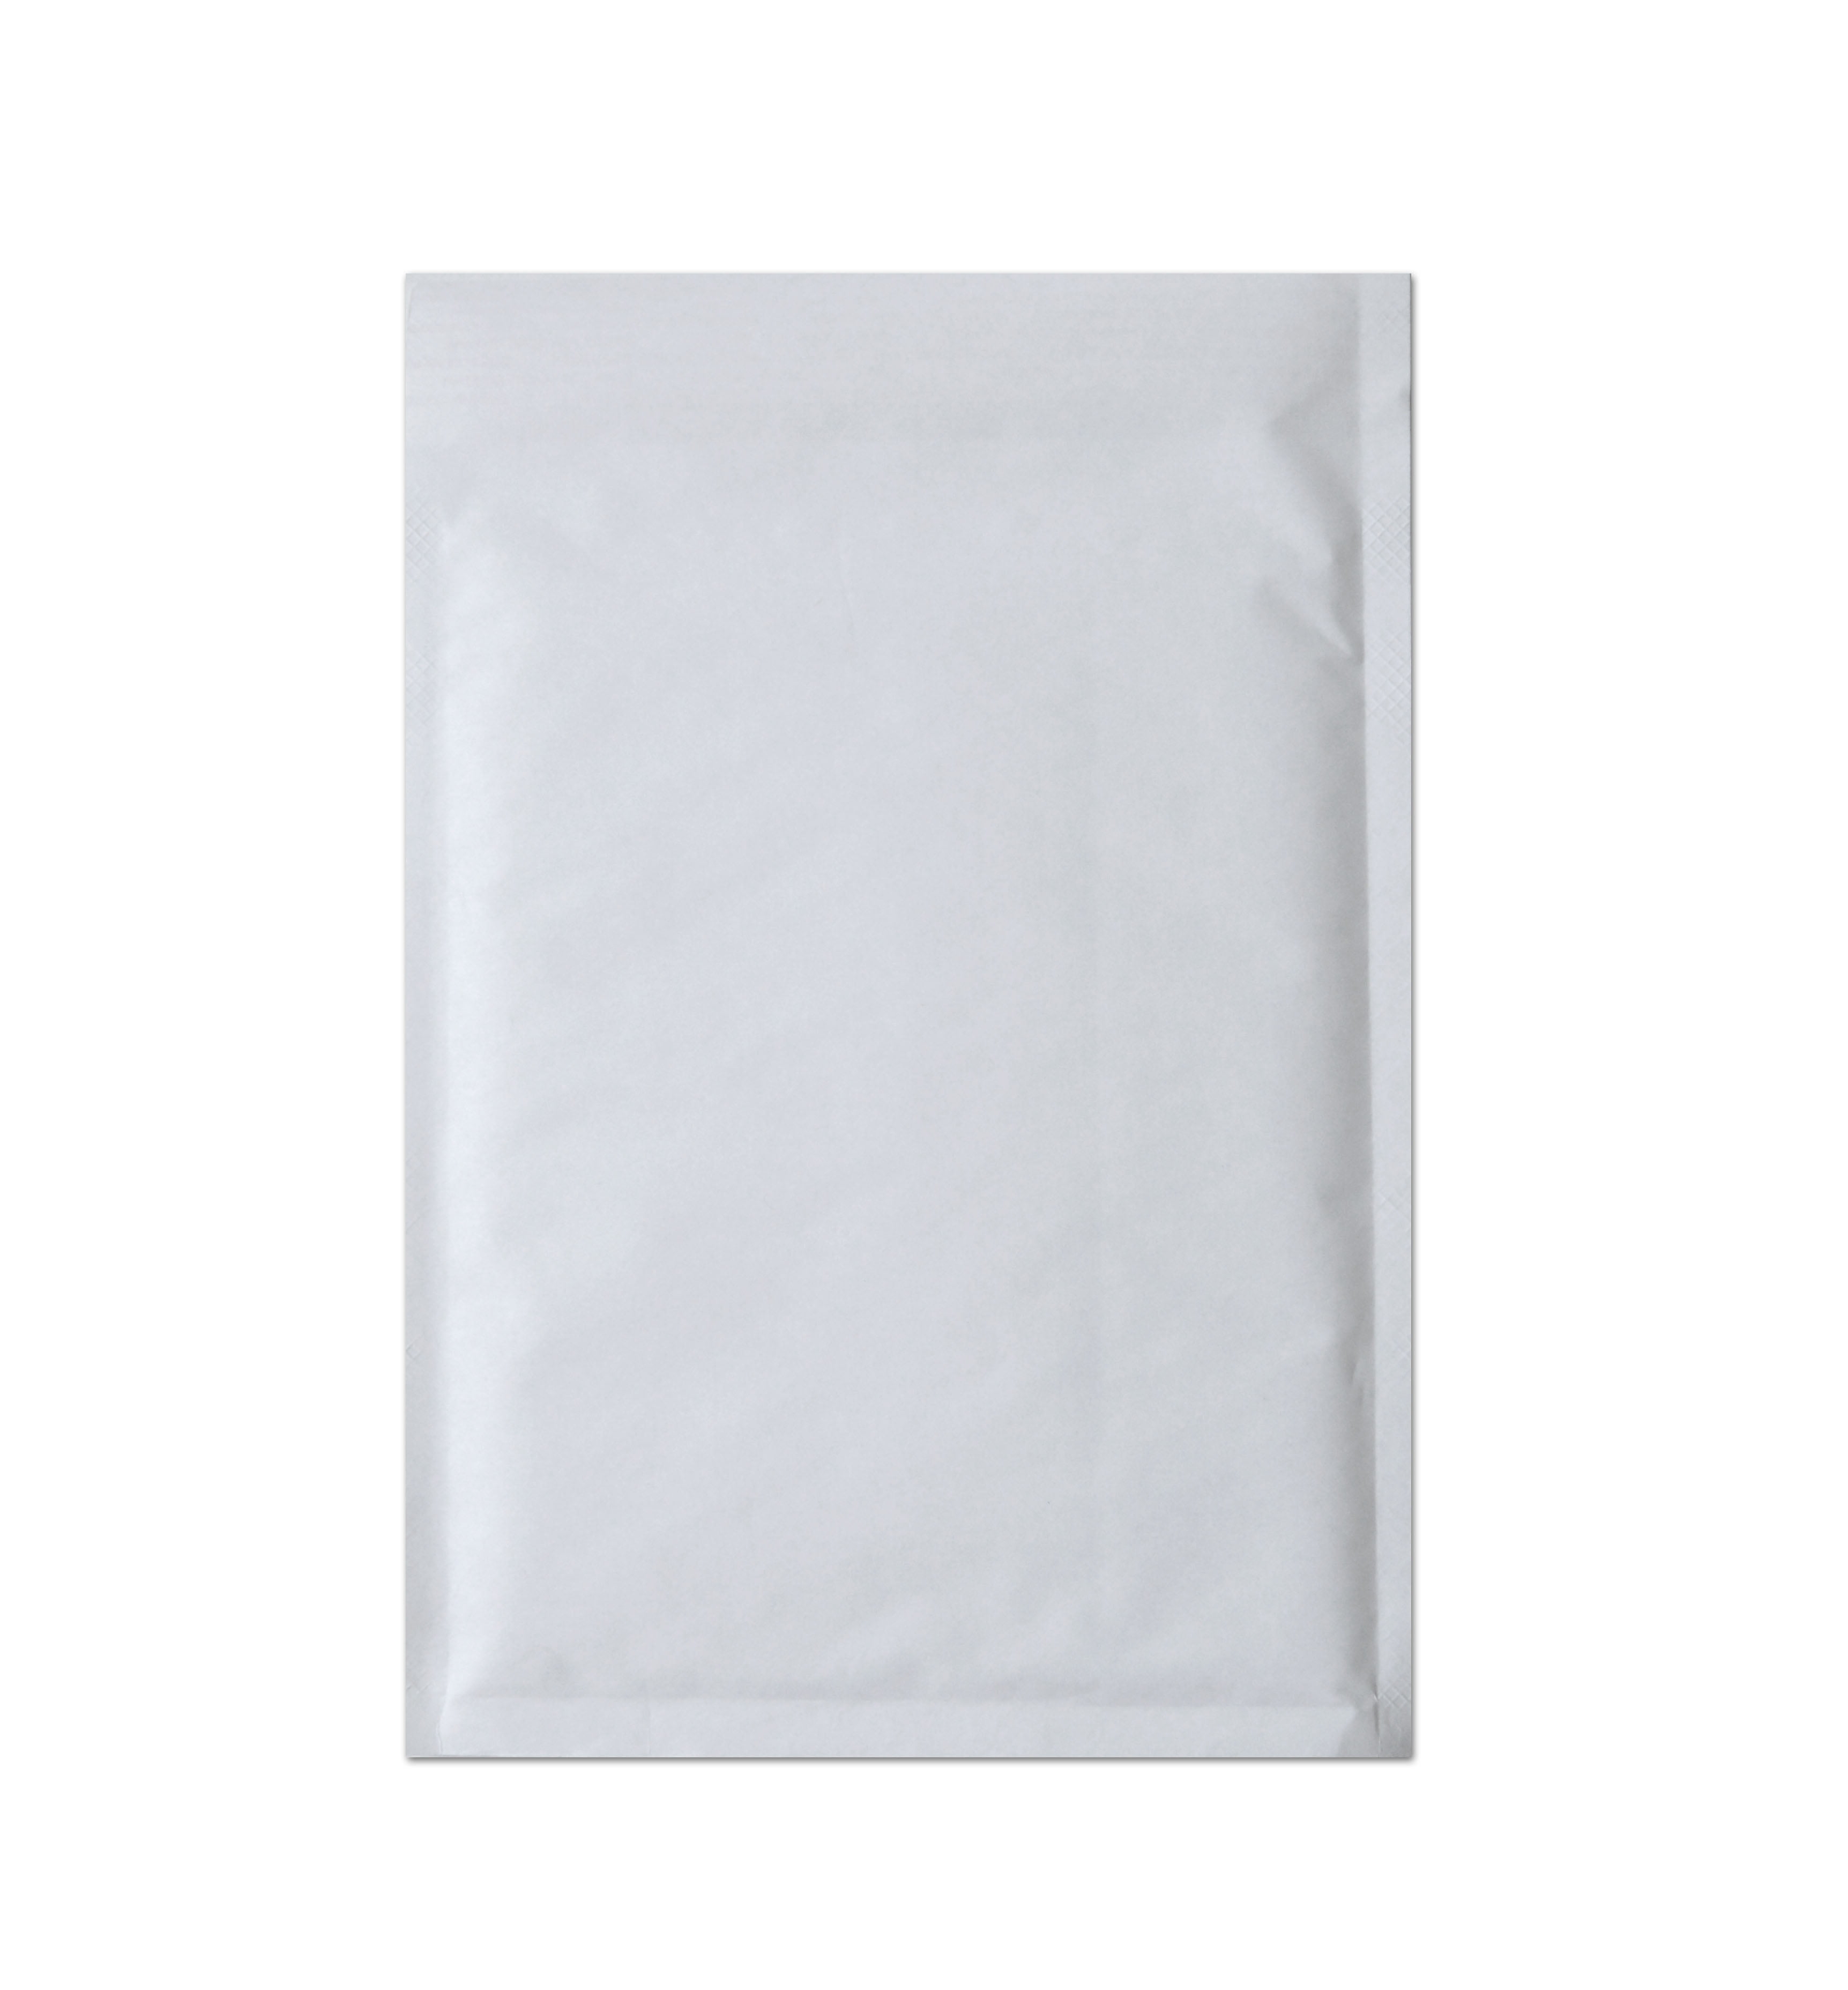 200 x AroFOL White Kraft AR01 JL000 Bubble Lined Padded Mailing Envelopes Bags 